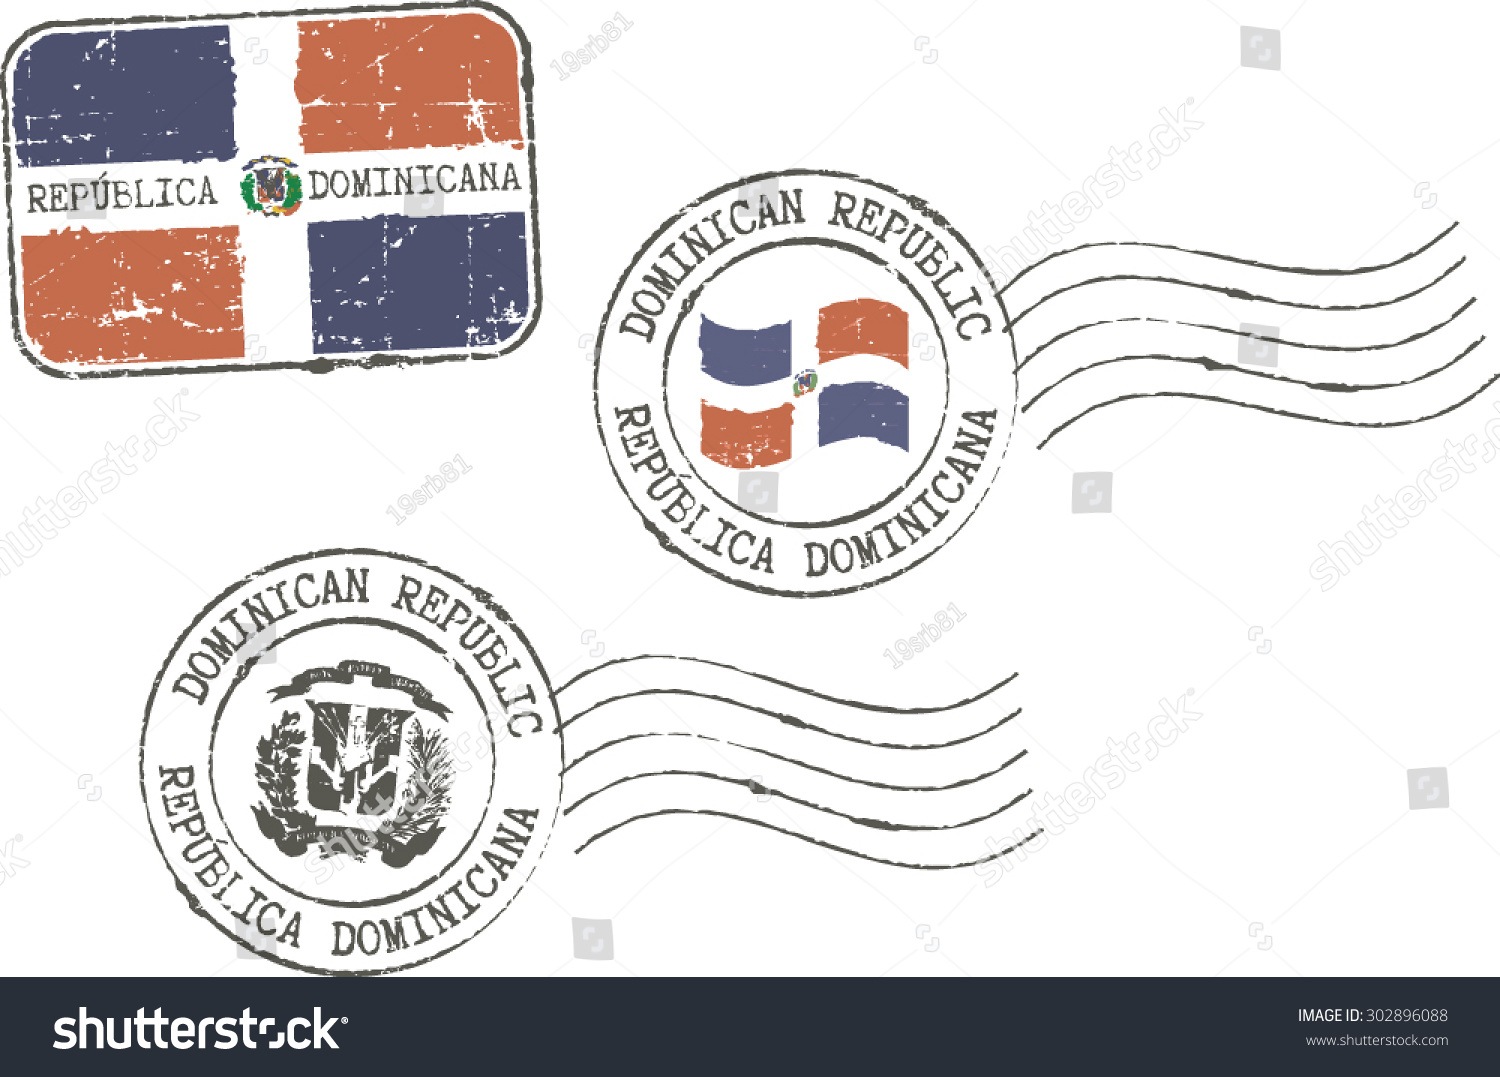 712 Dominican republic stamp Images, Stock Photos & Vectors | Shutterstock